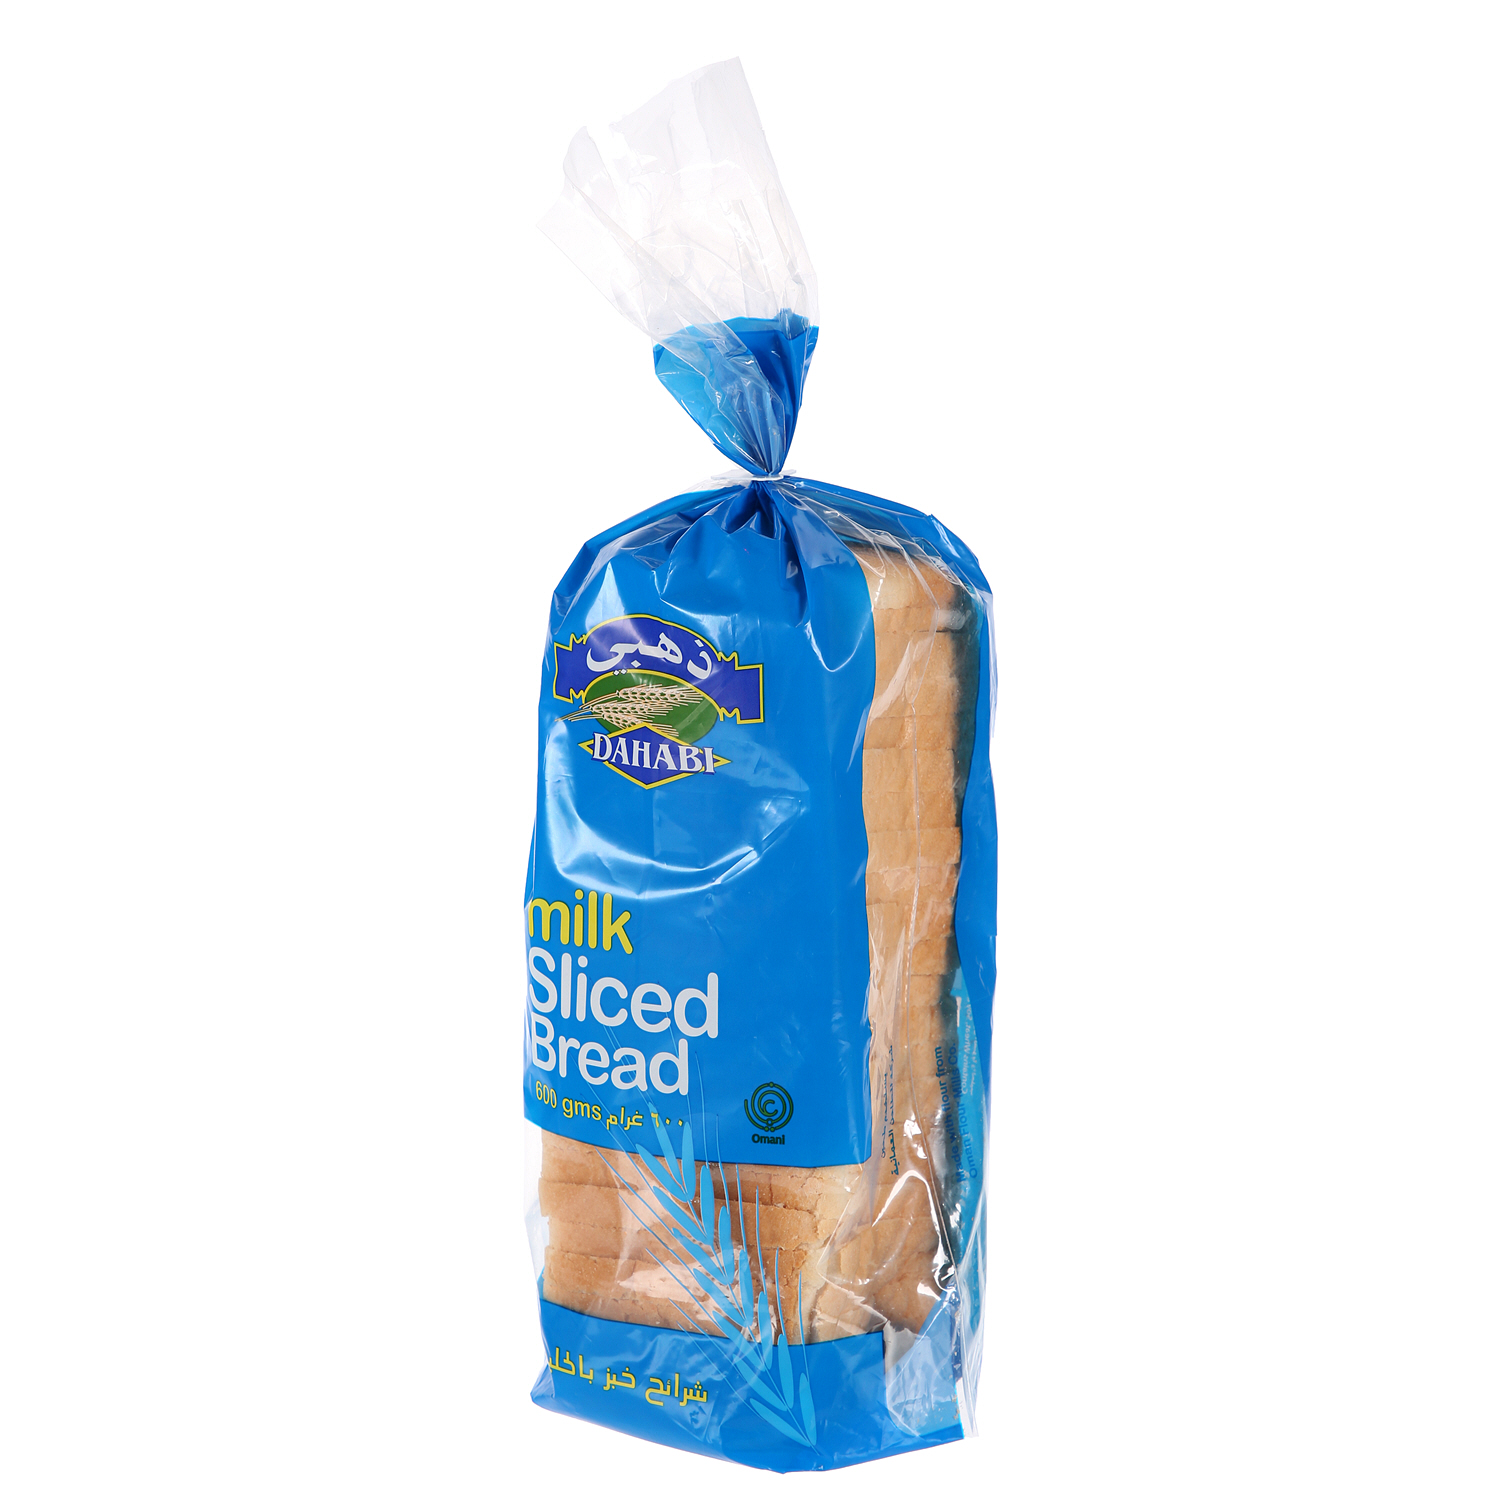 Dahabi Sliced Bread Milk 600gm